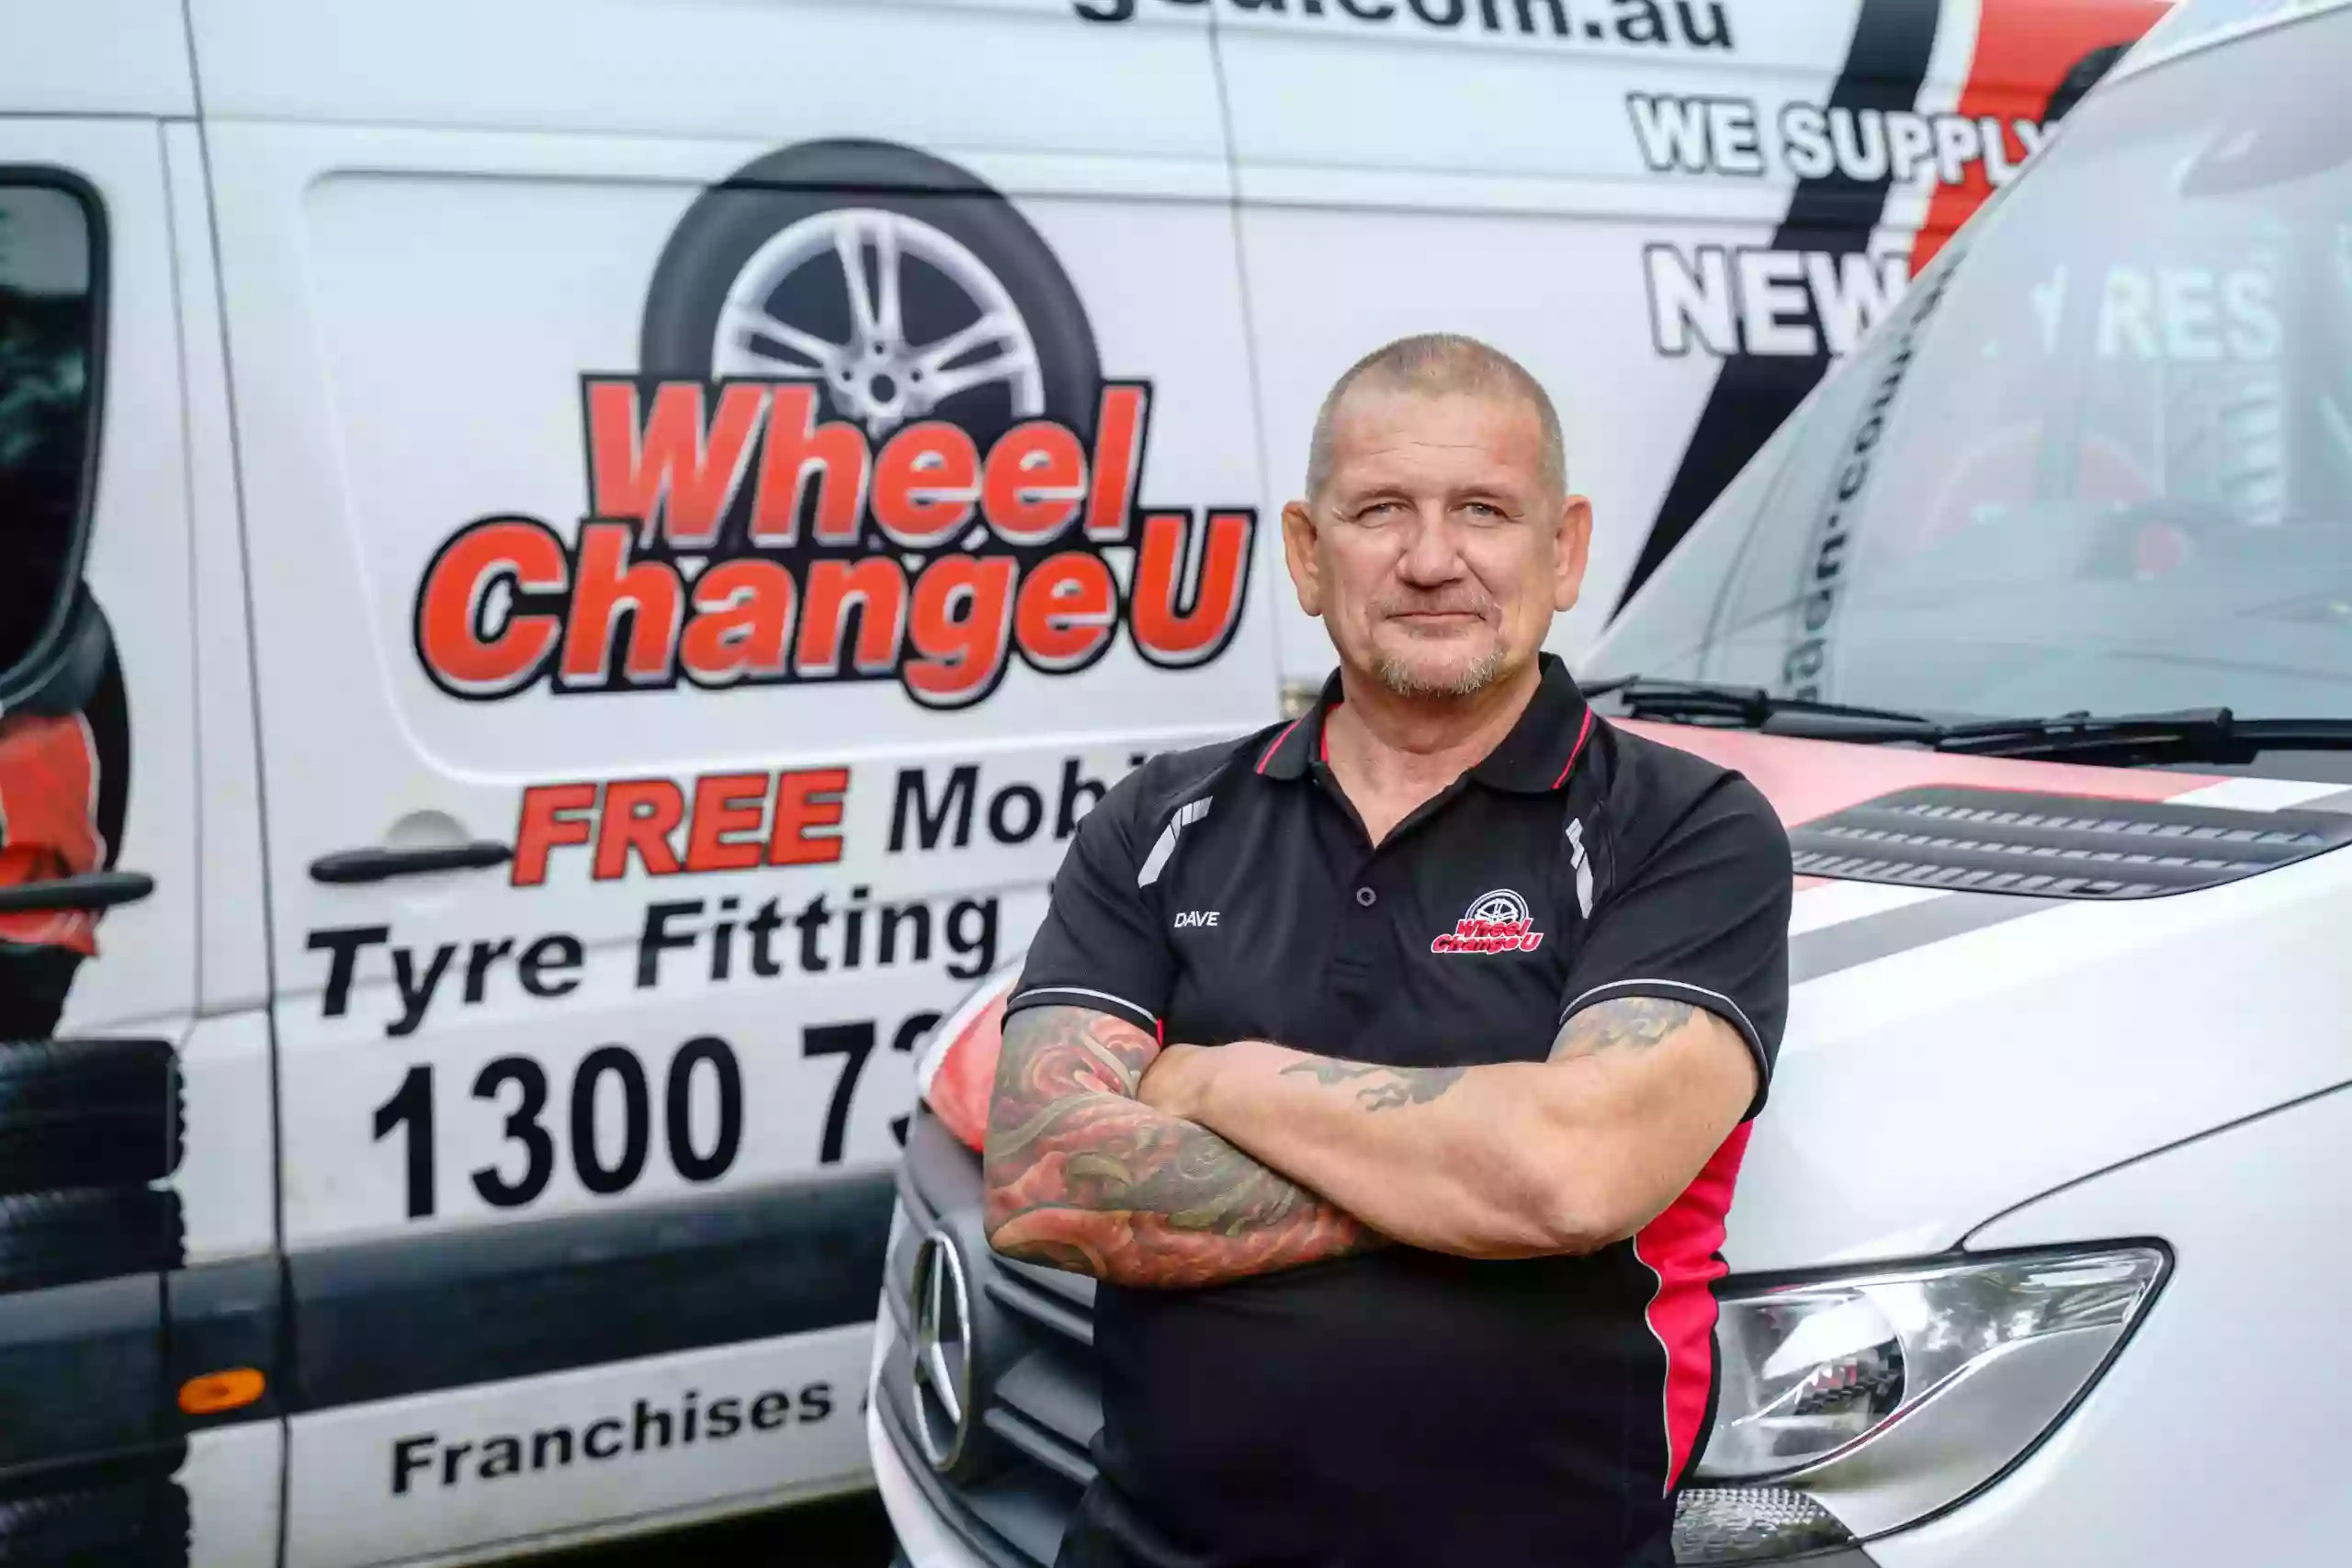 Wheel Change U Mobile Tyre Service Perth City of Swan